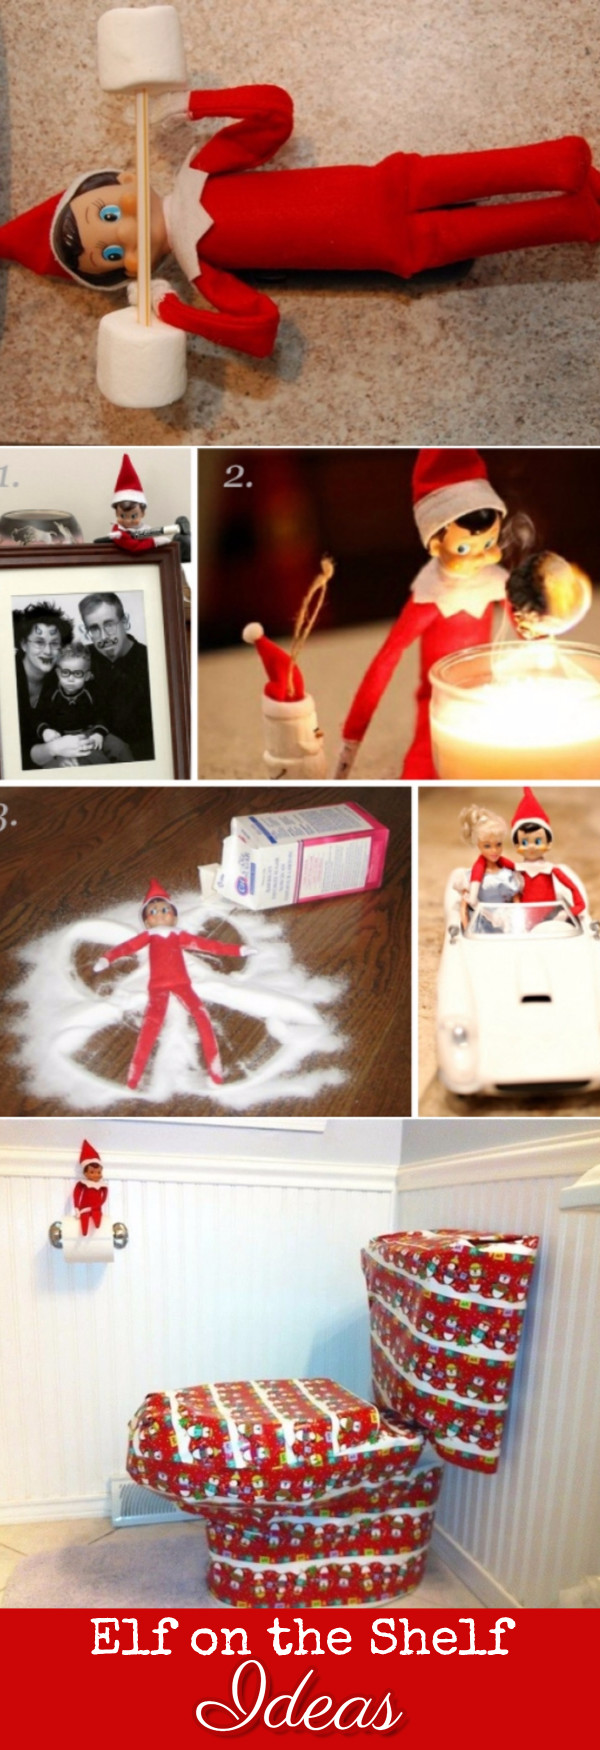 Elf on the Shelf ideas for night pranks this Christmas - great last minute Elf on the Shelf ideas too